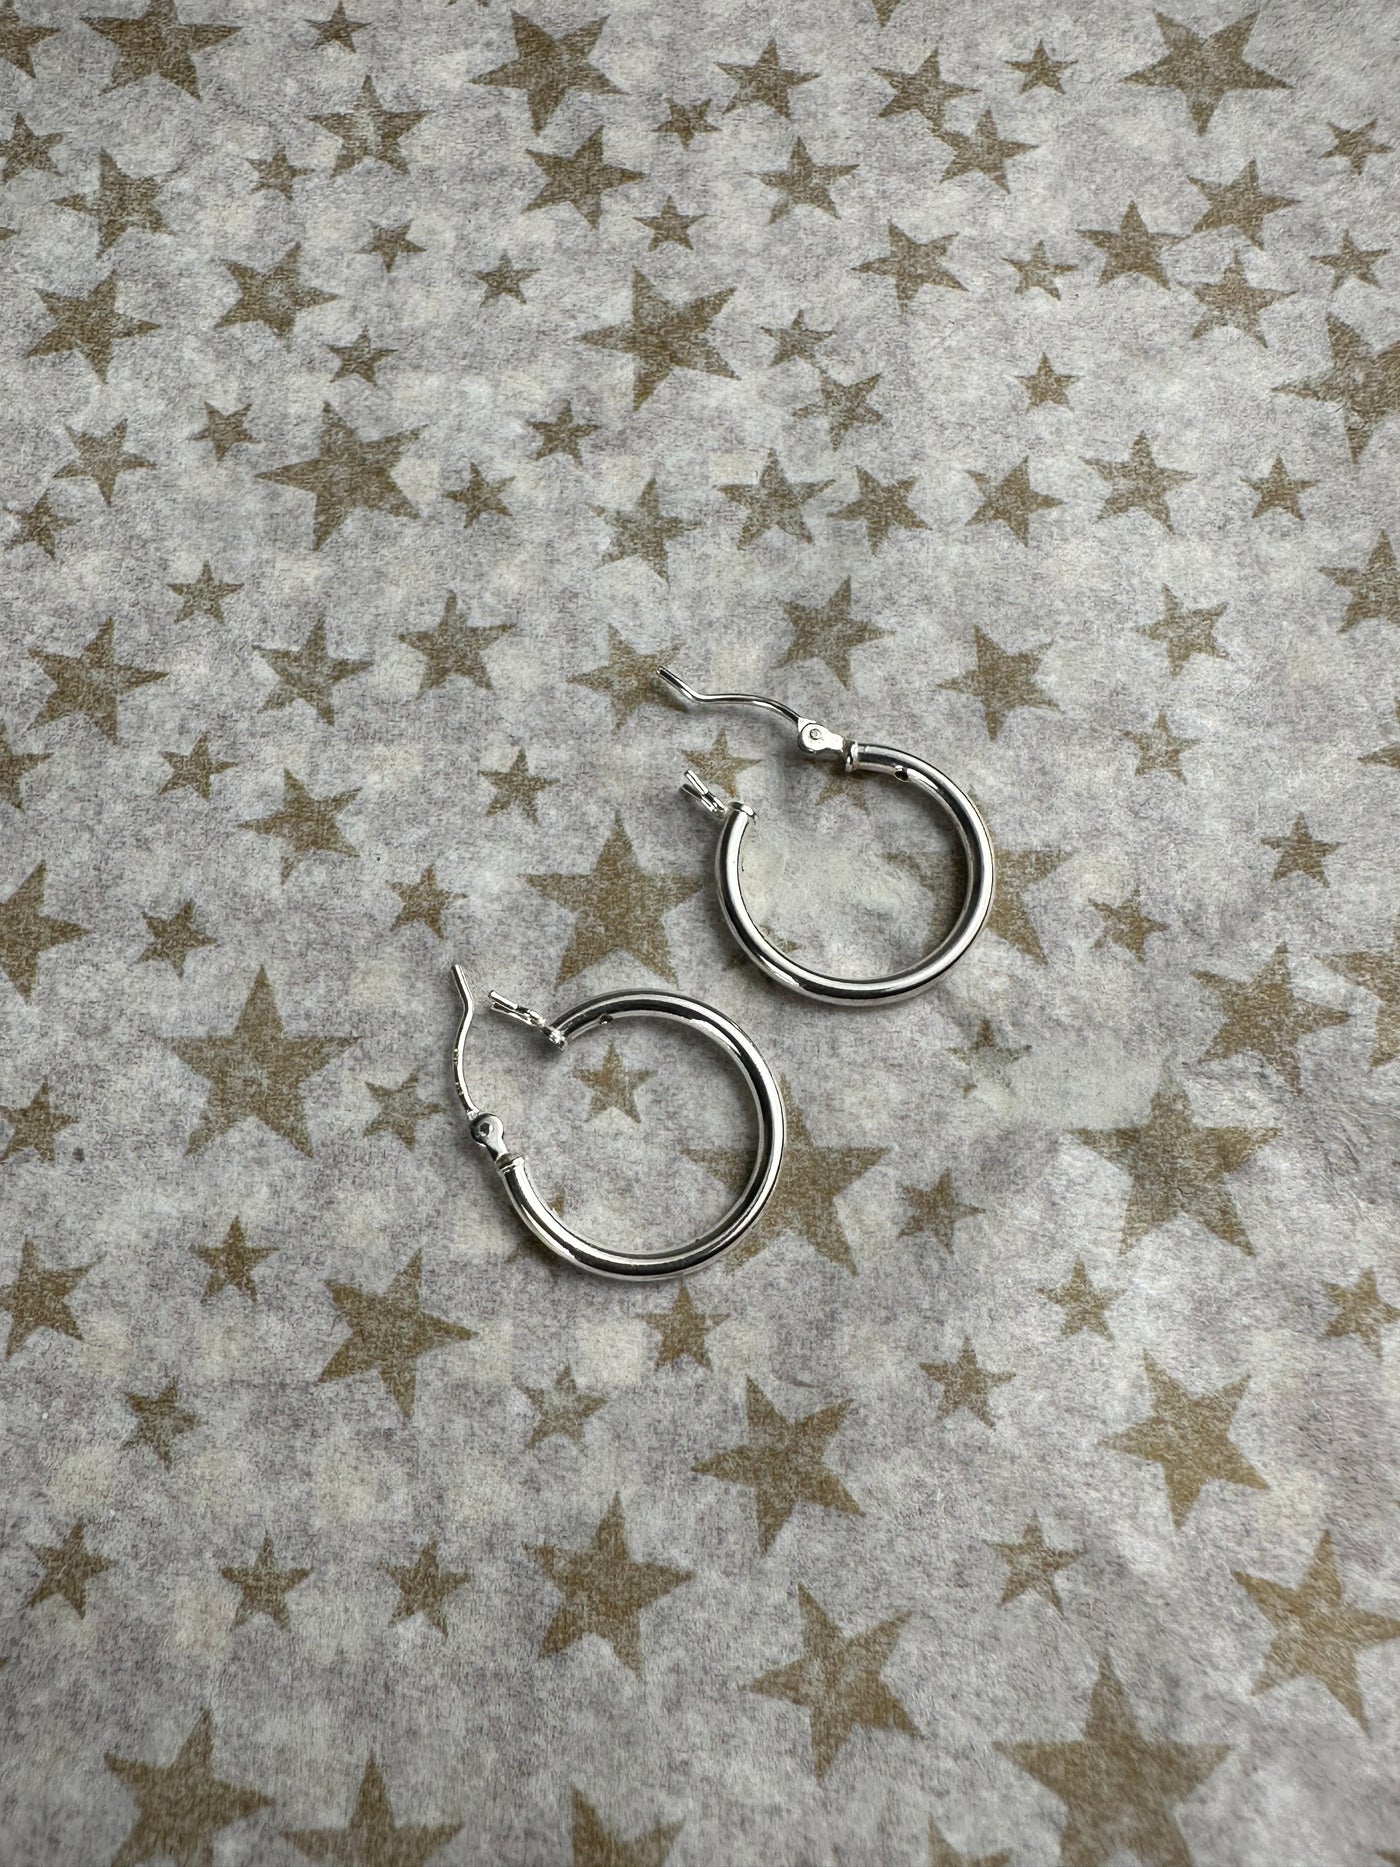 Sterling Silver Hoop Earrings 2mm x 15mm